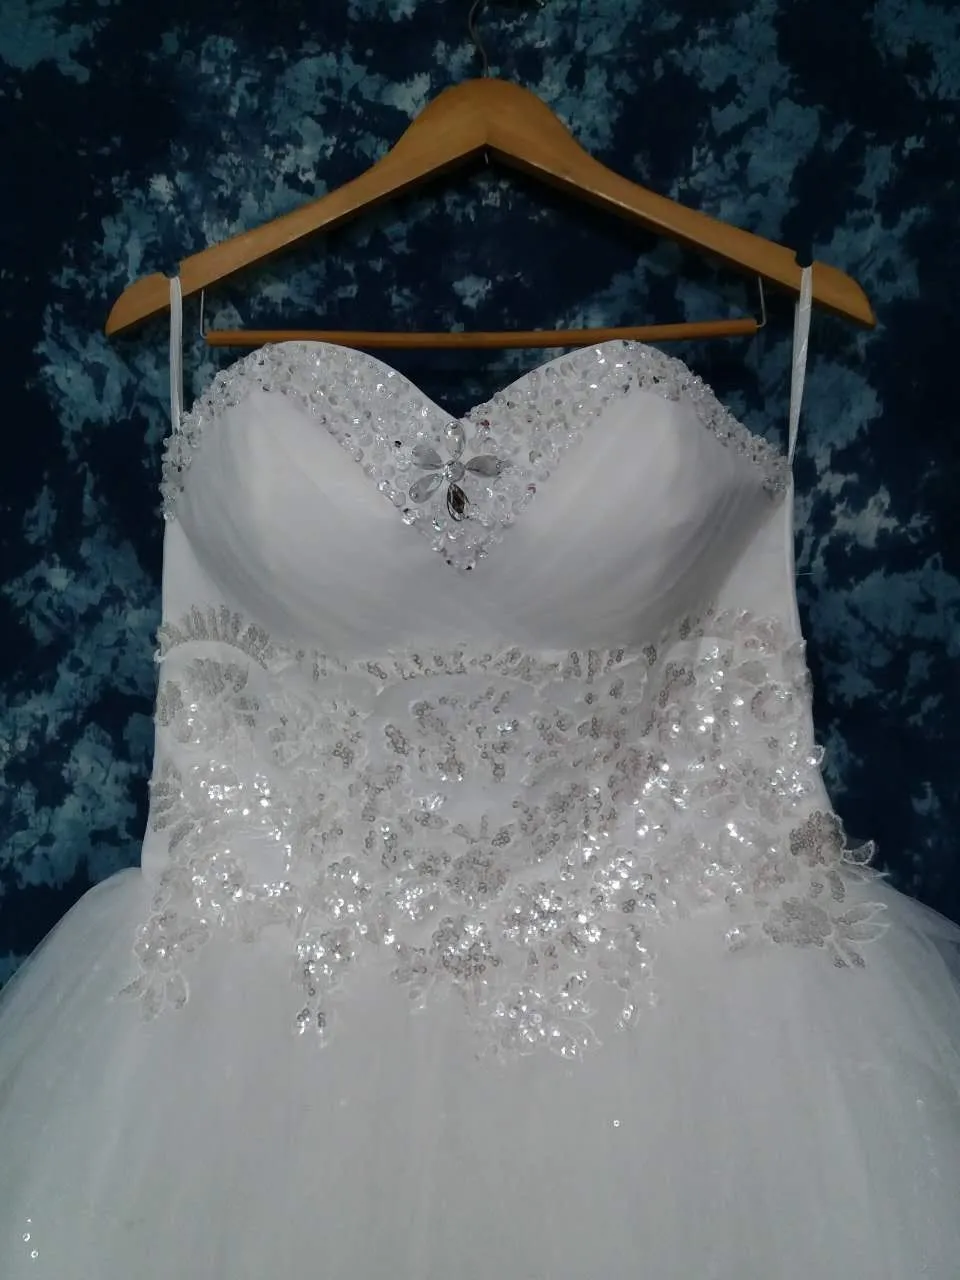 Custom Madeb mode princesse dentelle avec perles robe de mariée 2018 pas cher robe de bal robes de mariée vestido de noiva